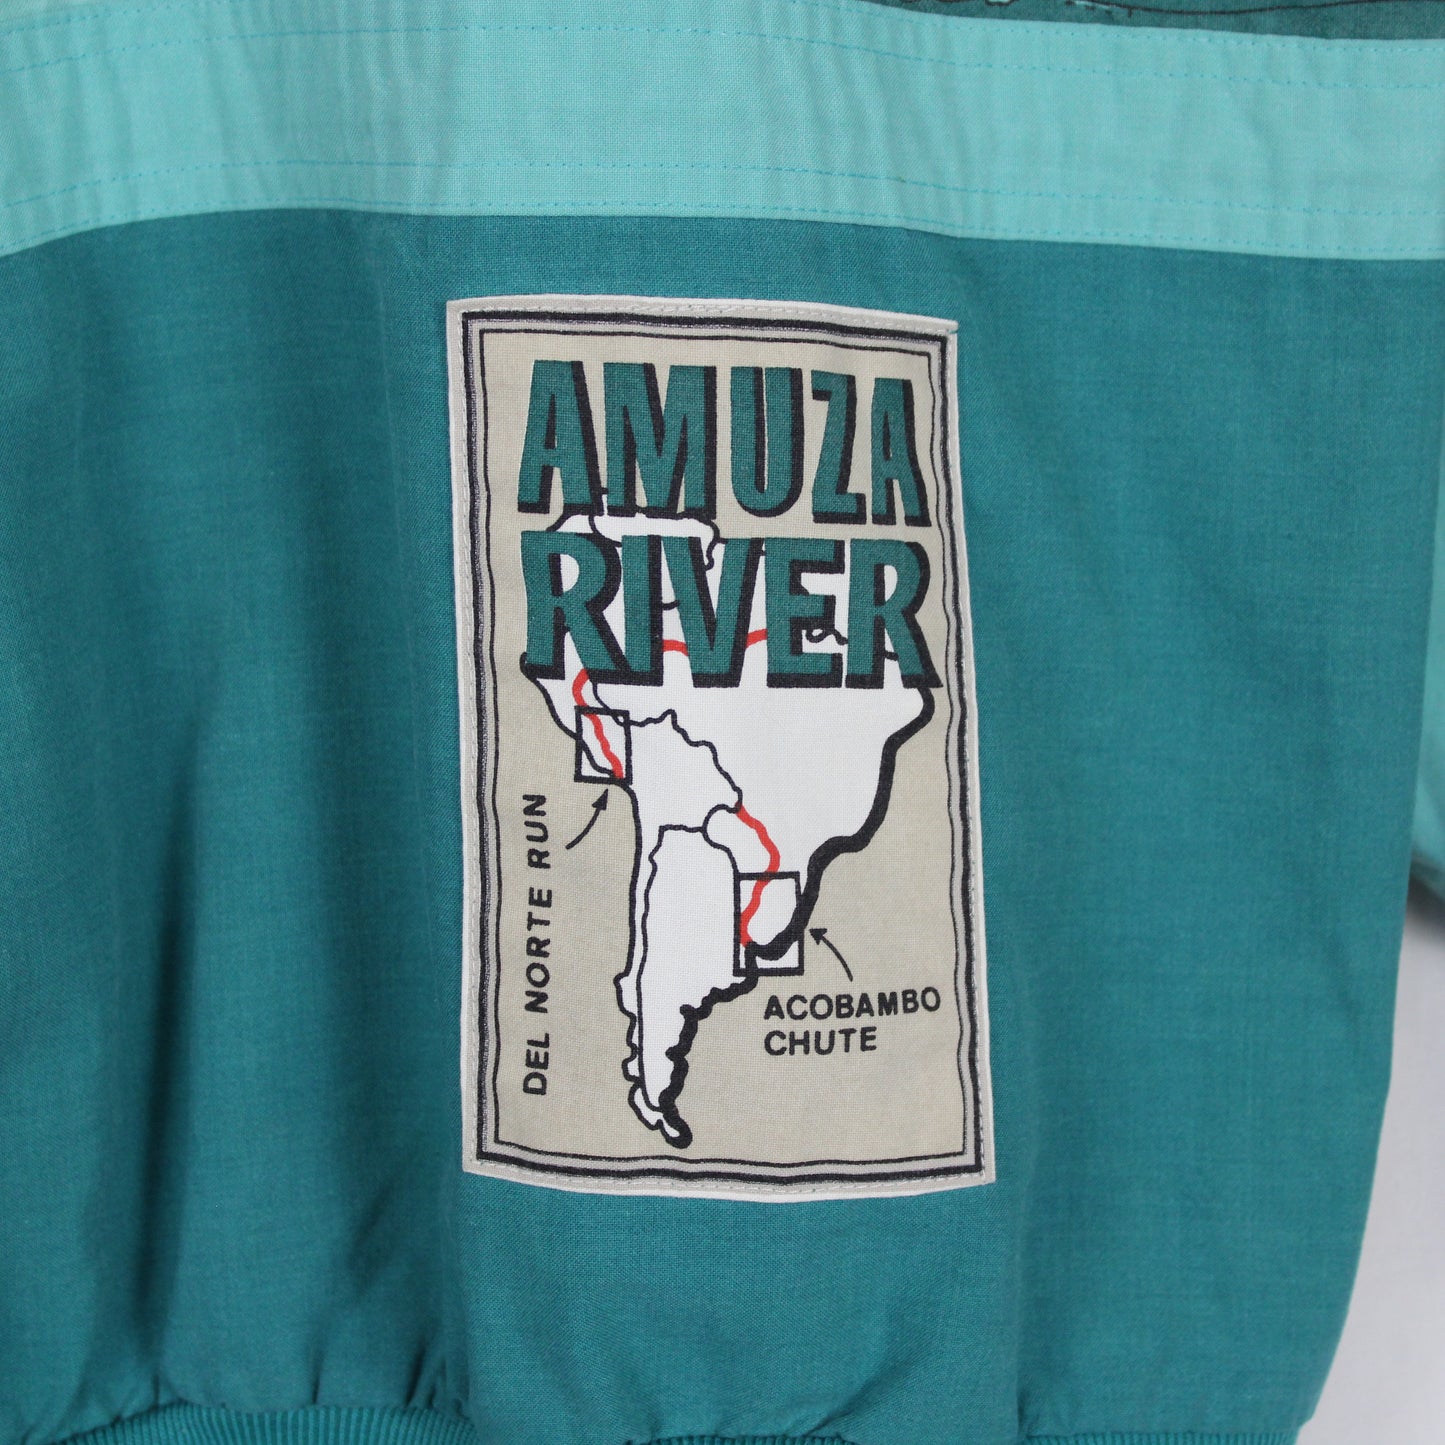 Vintage 80's Adidas Amuza River Devil's Toenail Sweatshirt - L